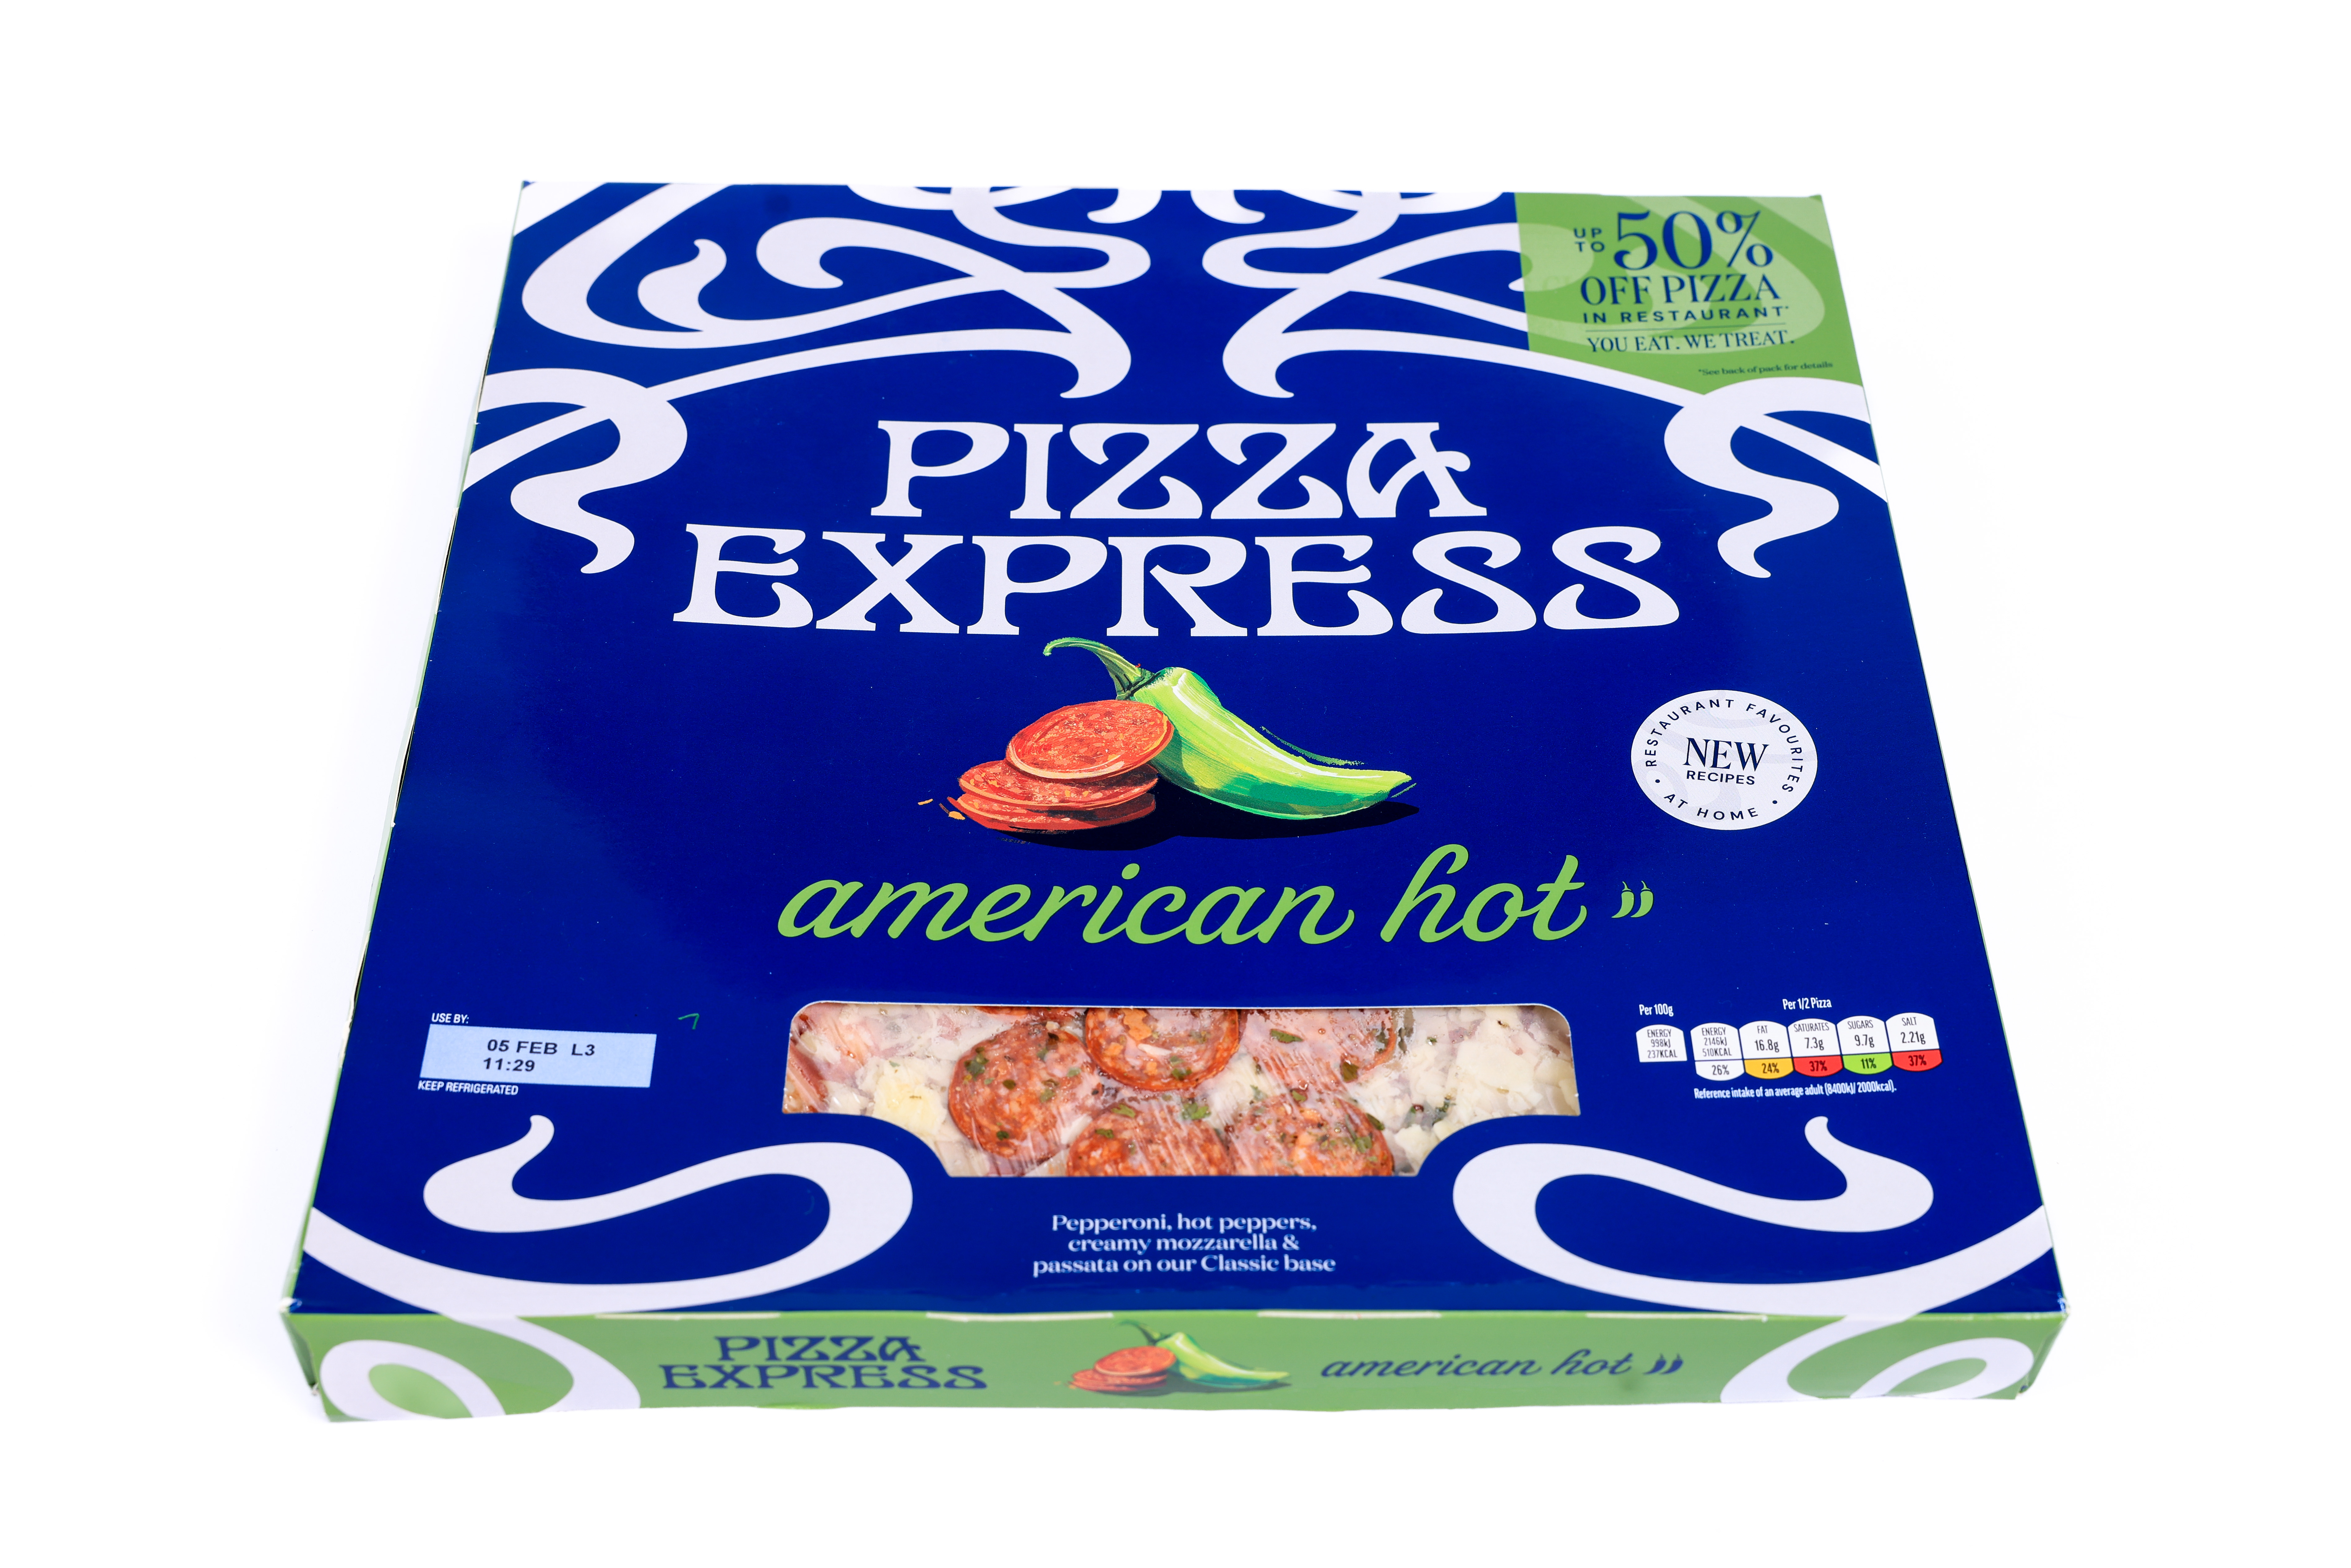 Eine Pizza Express American Hot Pizza kostet bei sainsburys.co.uk 6 £